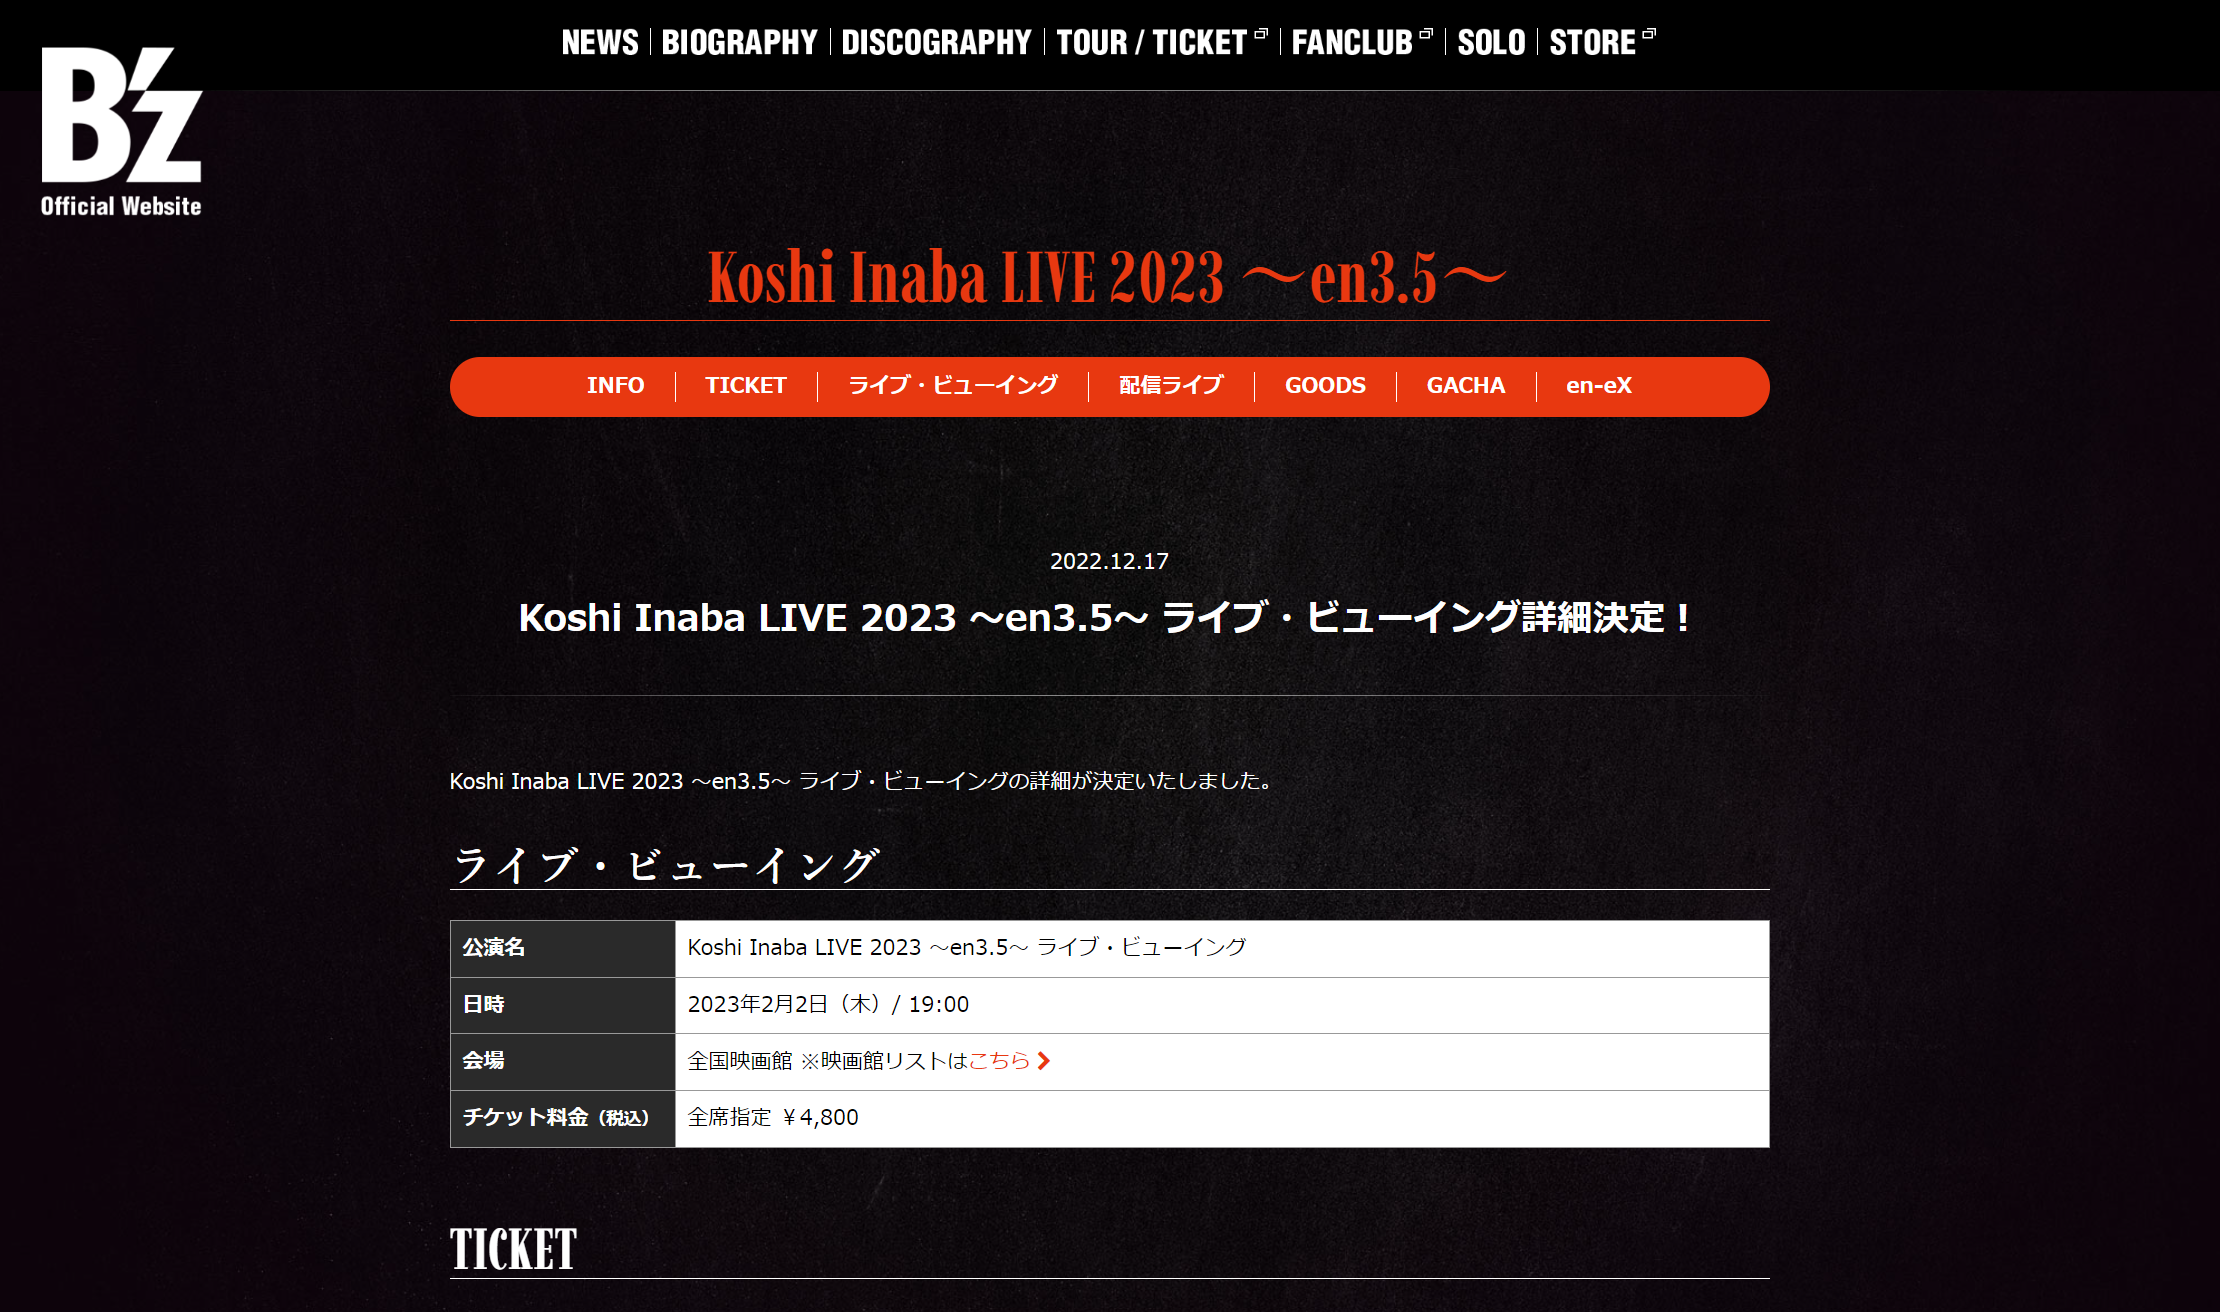 『Koshi Inaba LIVE 2023 〜en3.5〜 ライブ・ビューイング』の案内ページ